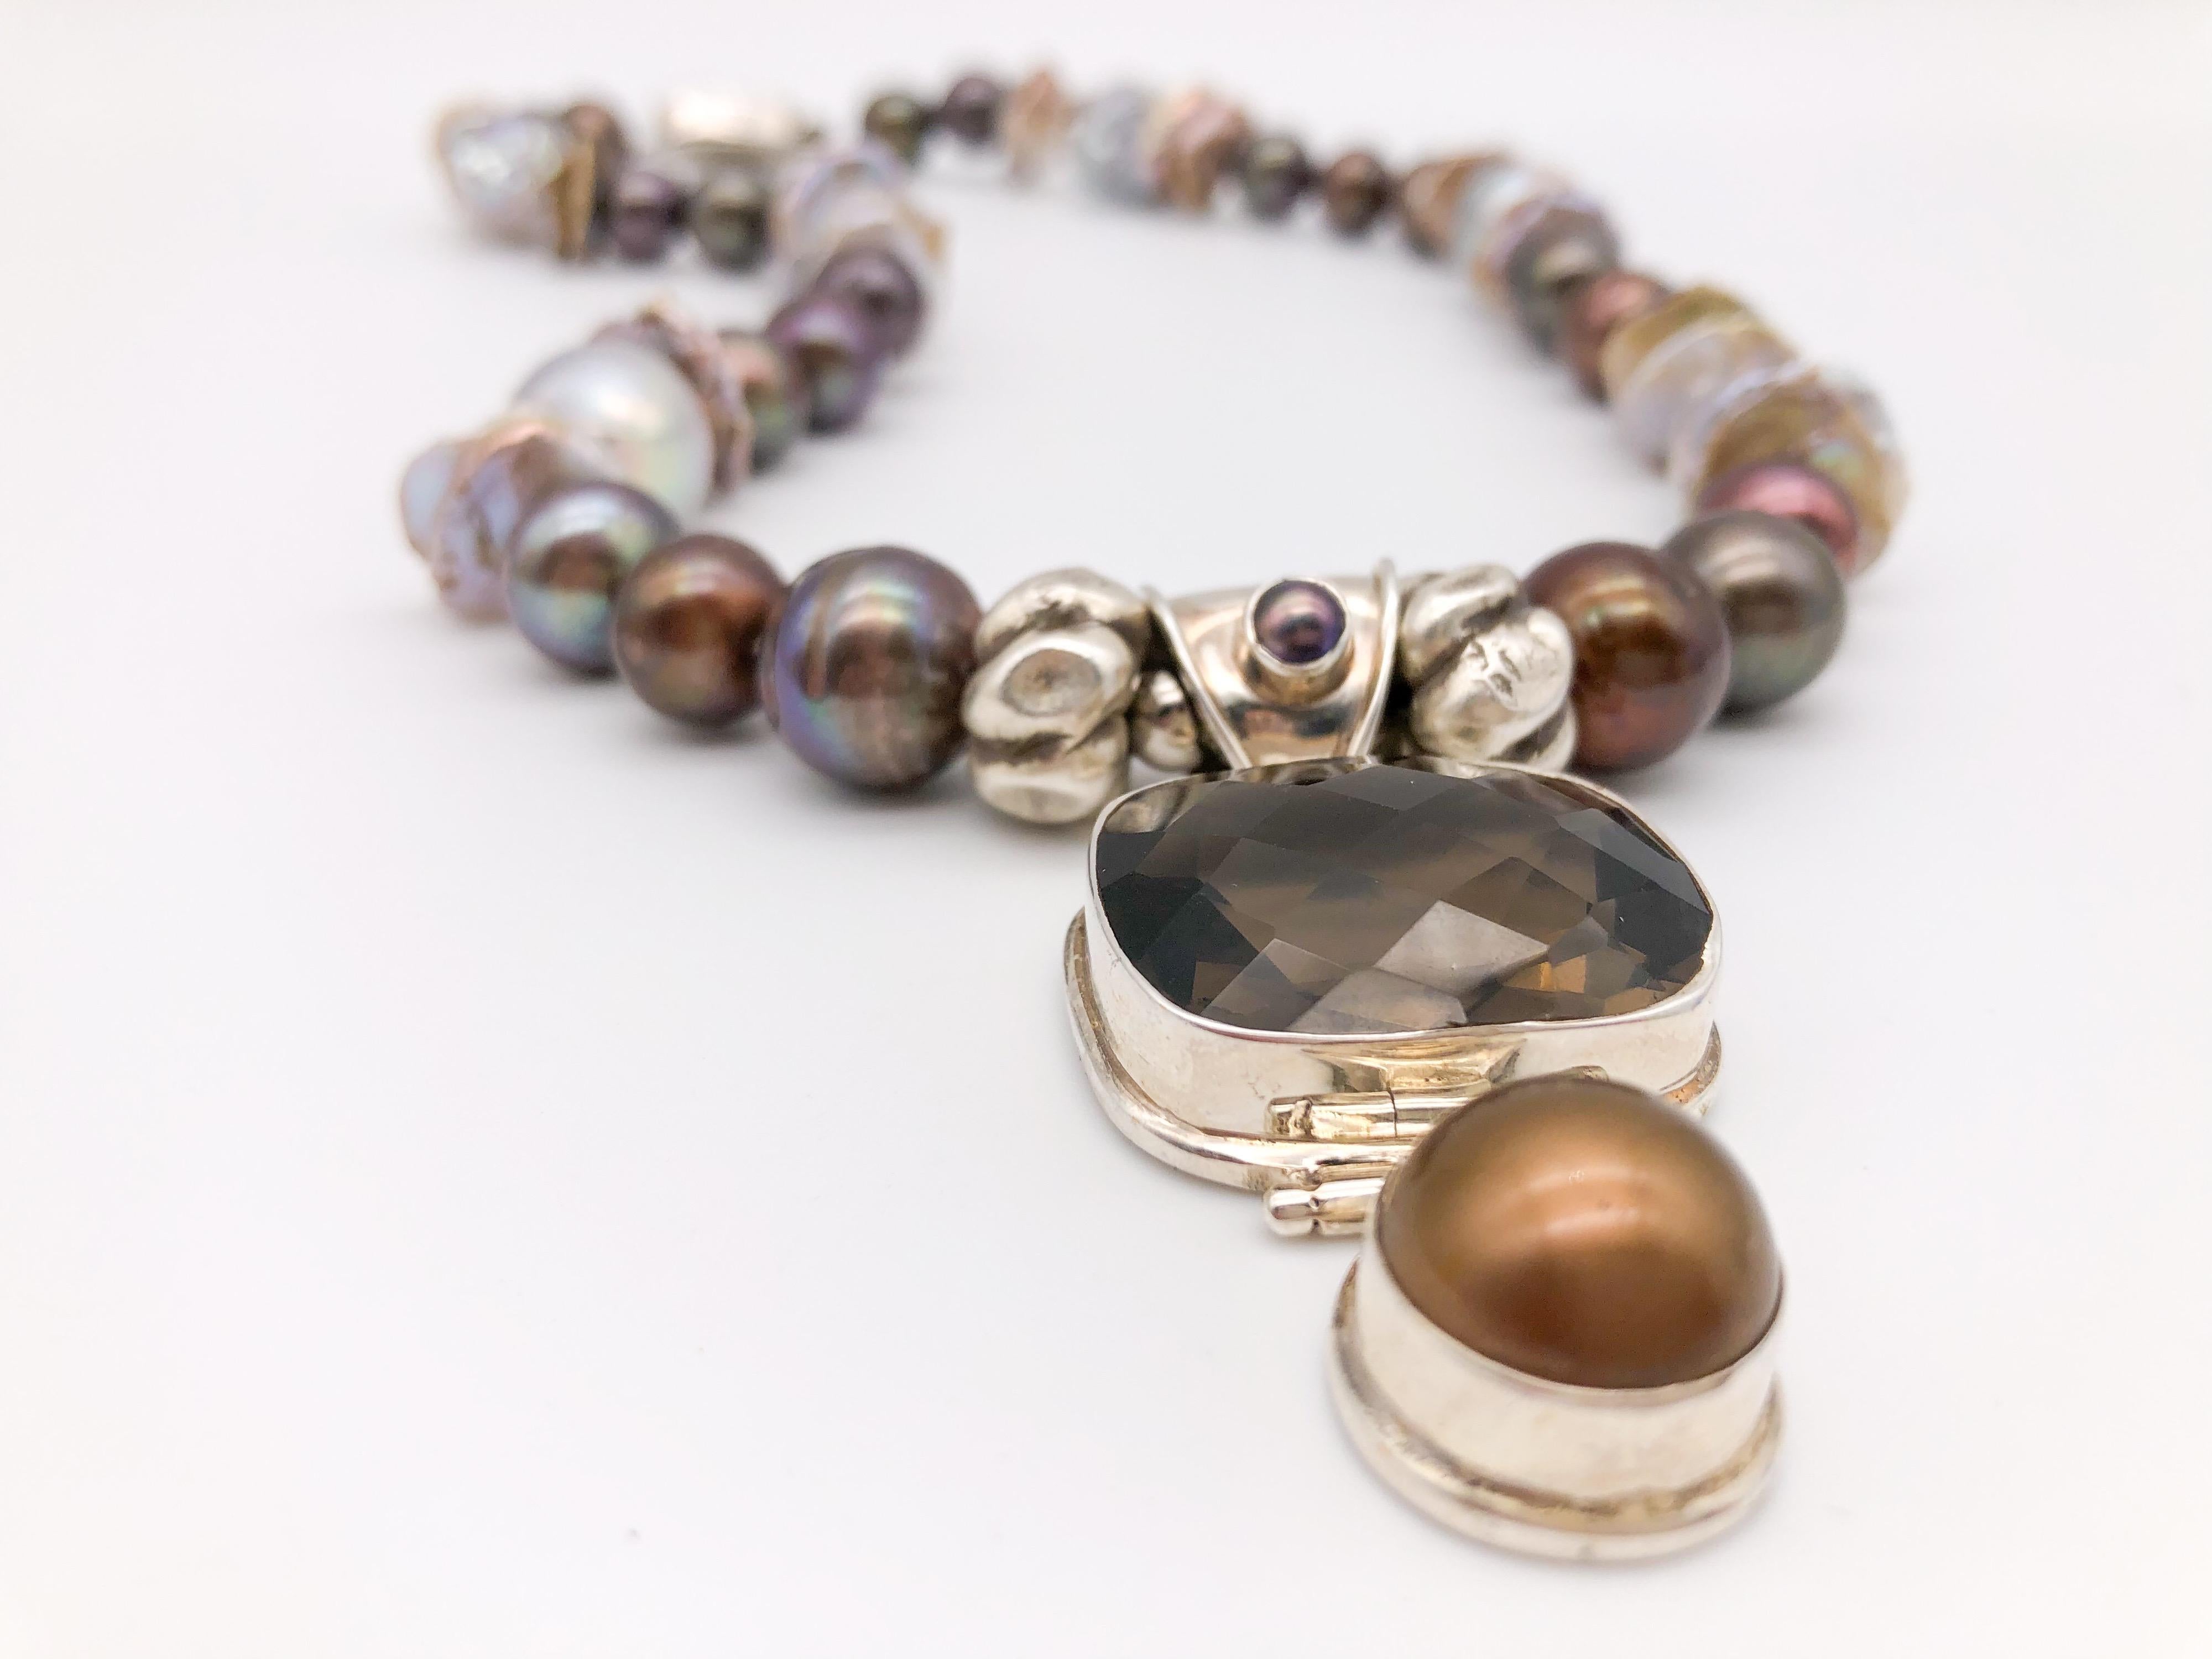 Mixed Cut A.Jeschel Smoky Quartz necklace and chocolate Pearl pendant